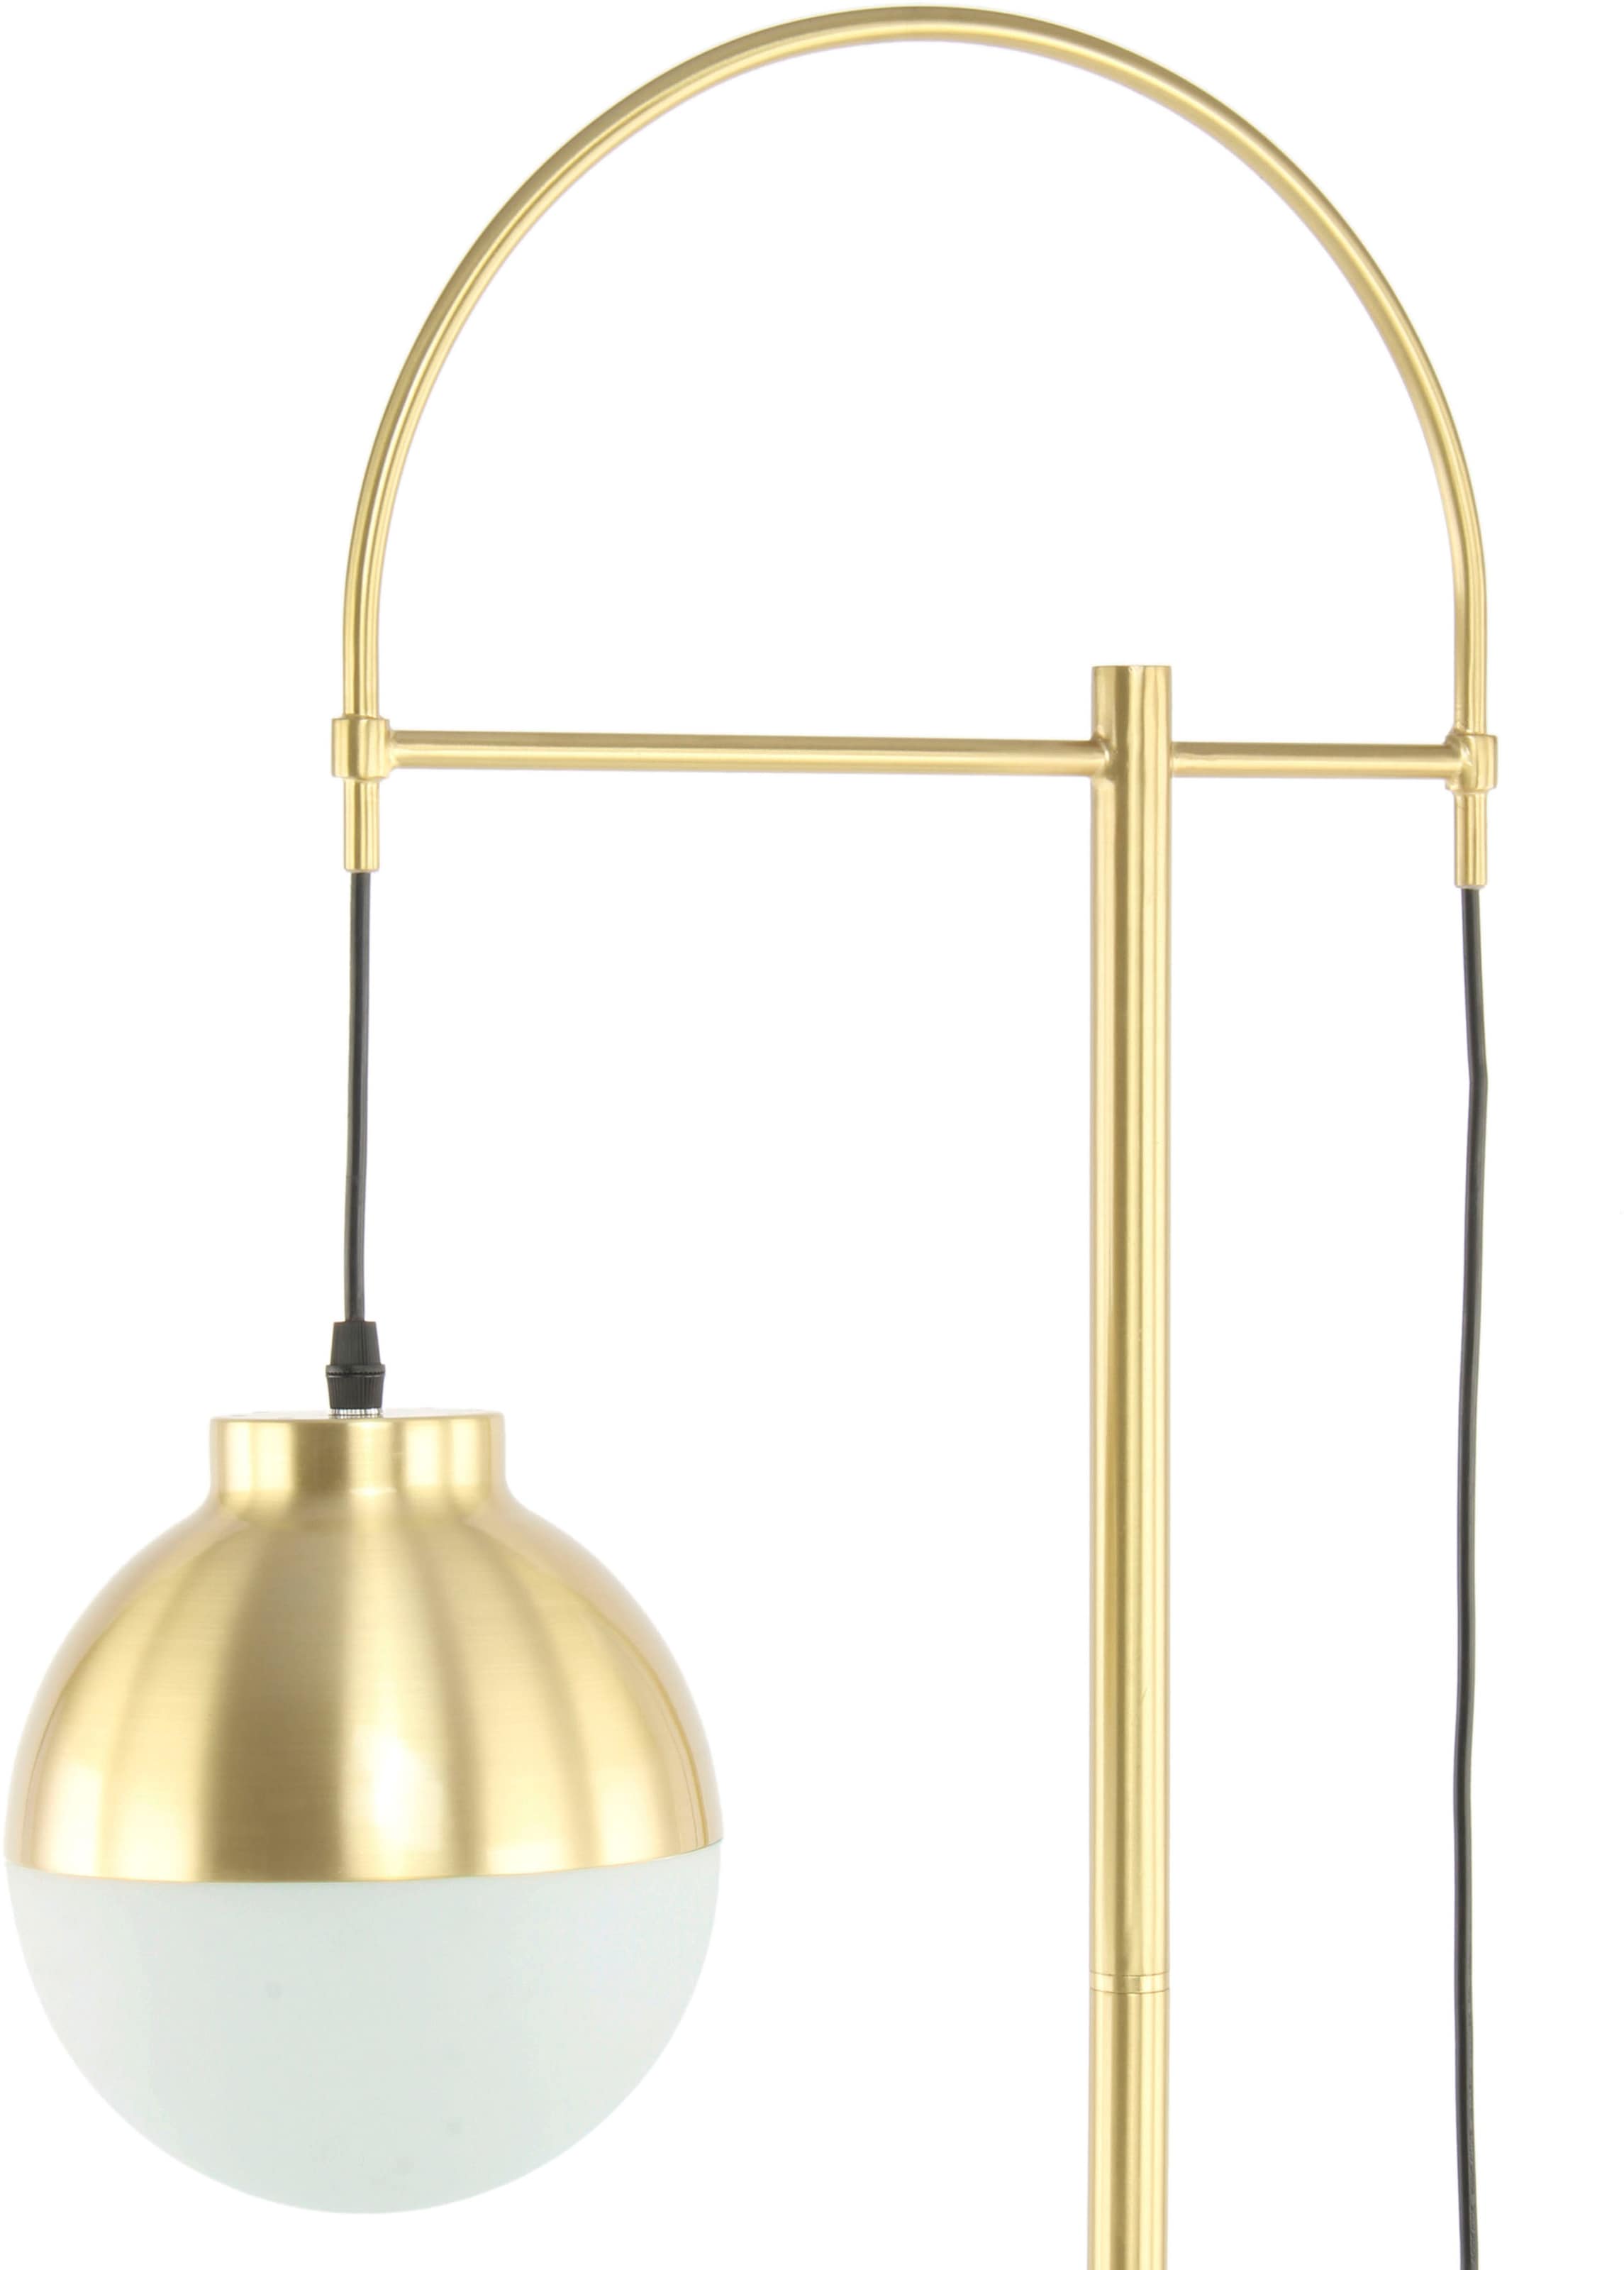 Kayoom Stehlampe »Lavina«, schlicht, modern, kugelförmig